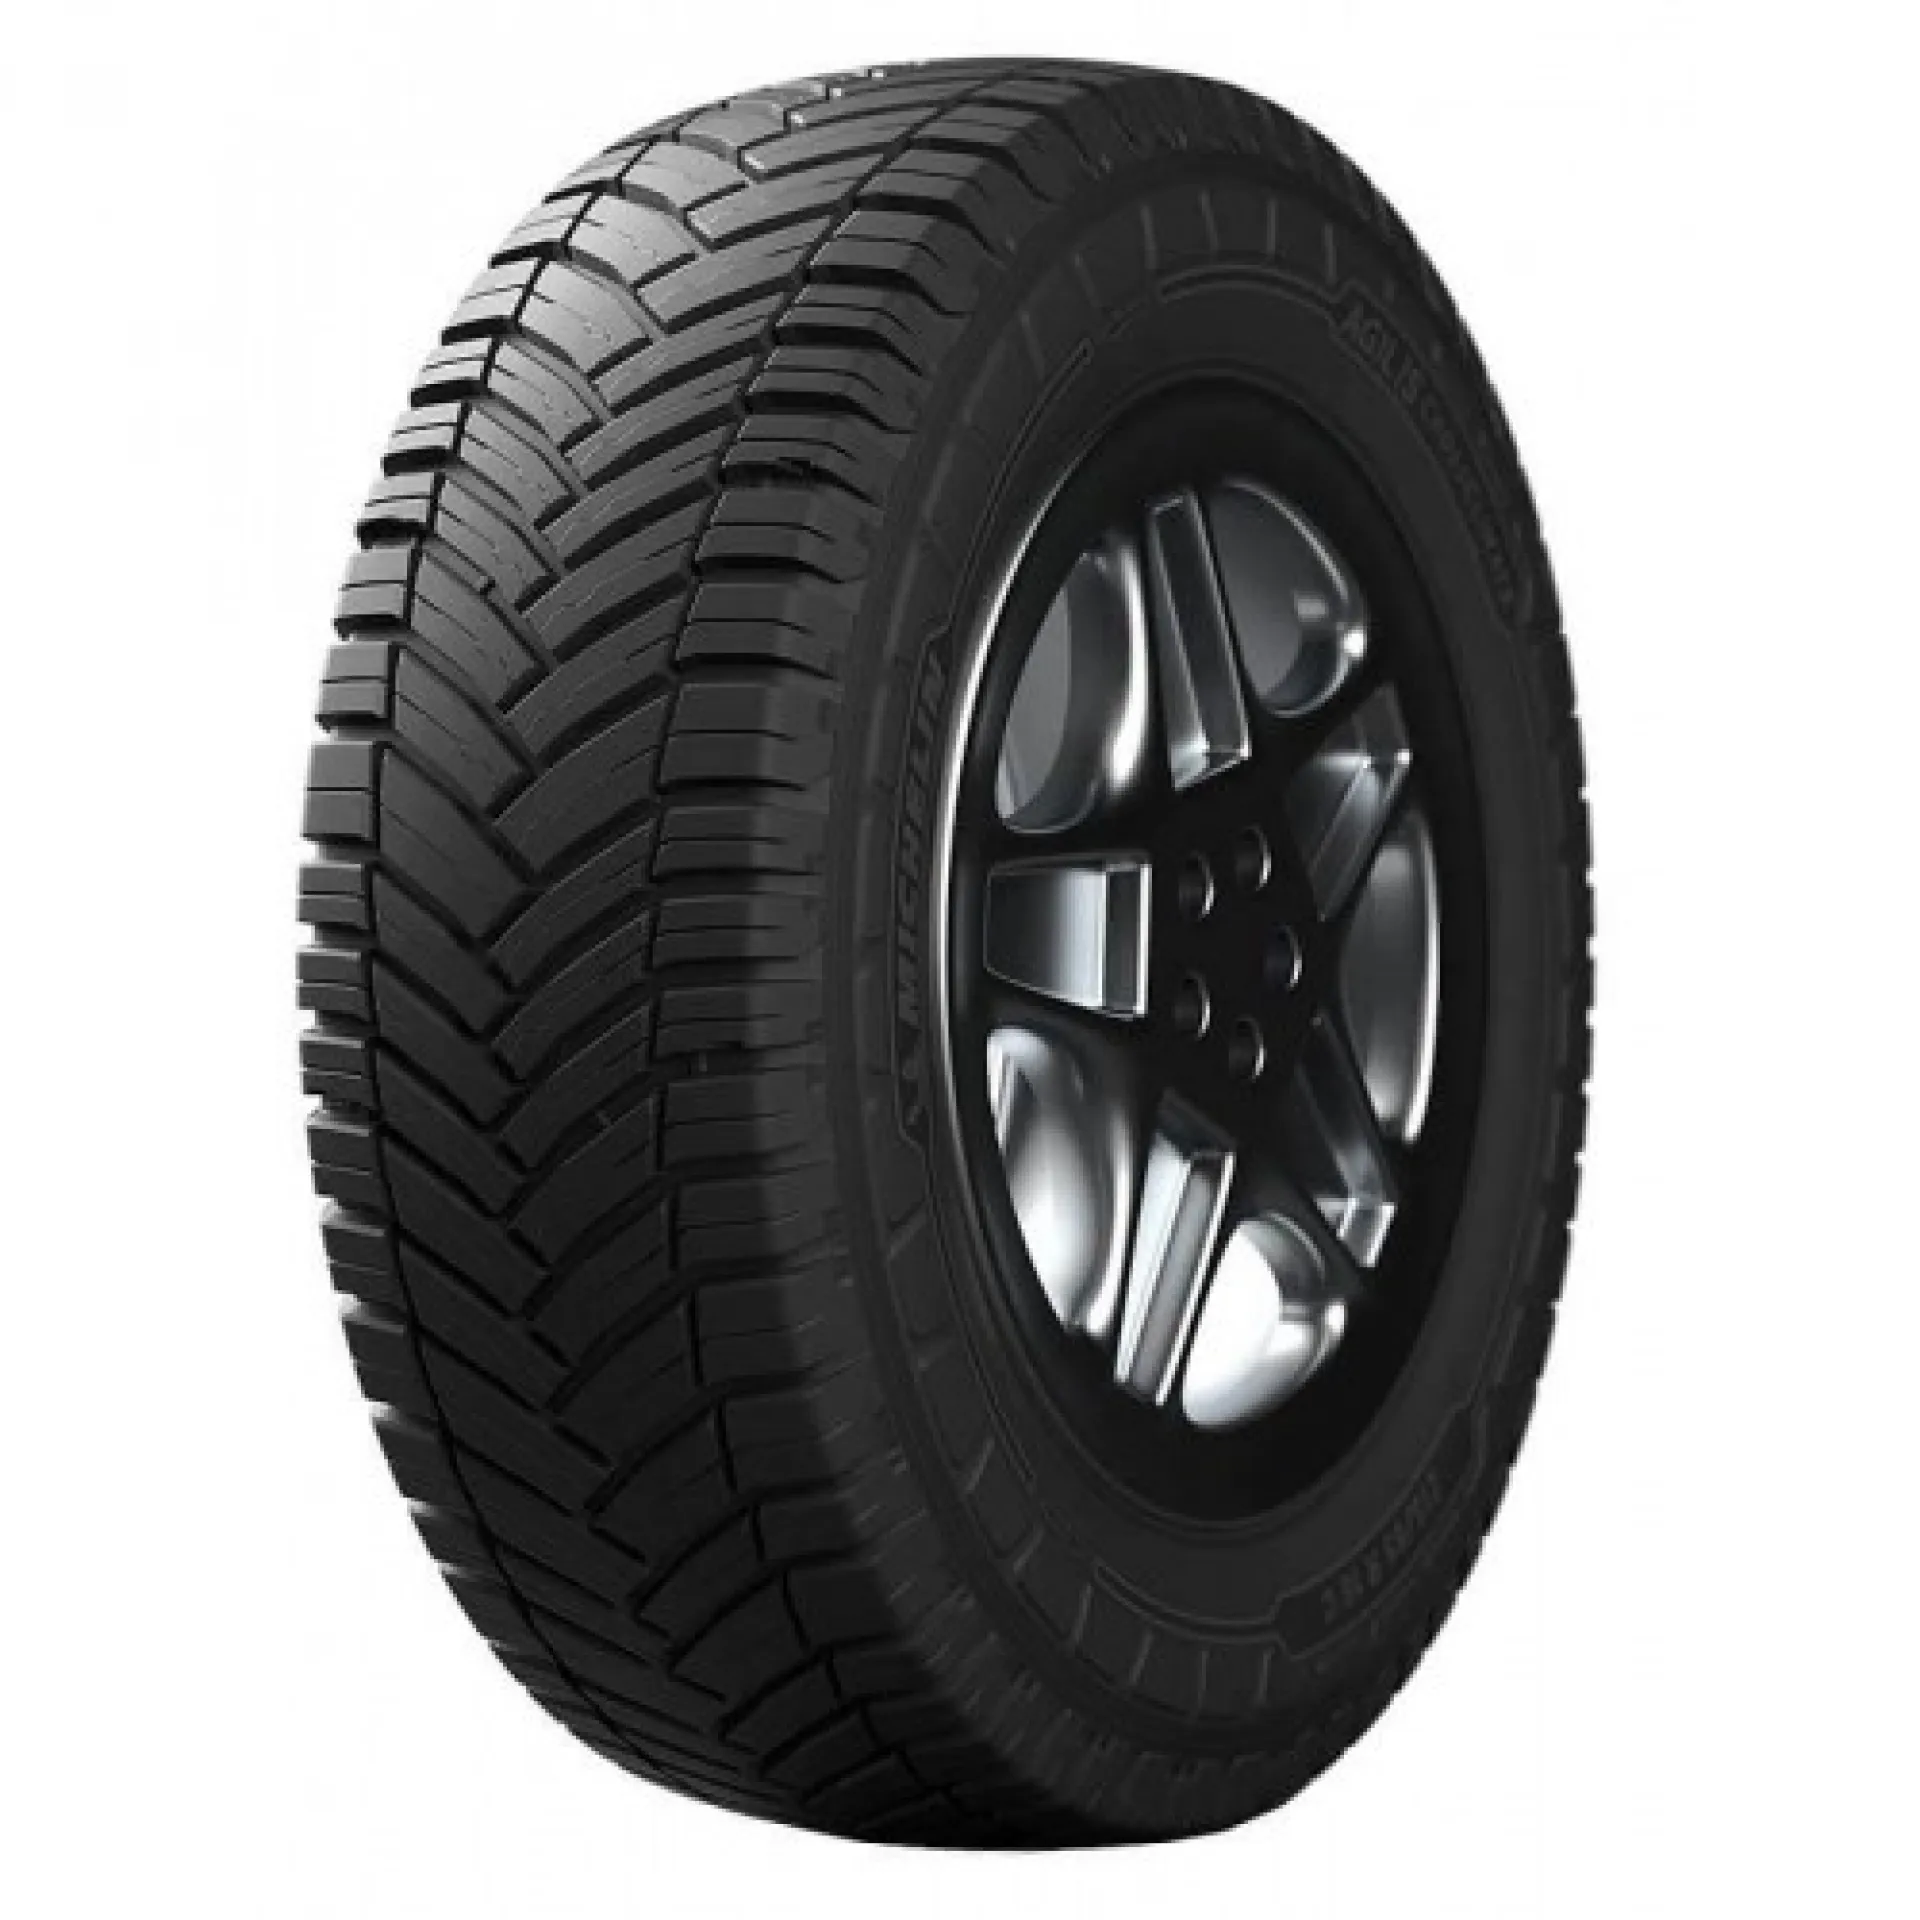 Michelin Agilis CrossClimate - Tire Reviews and Tests | Autoreifen